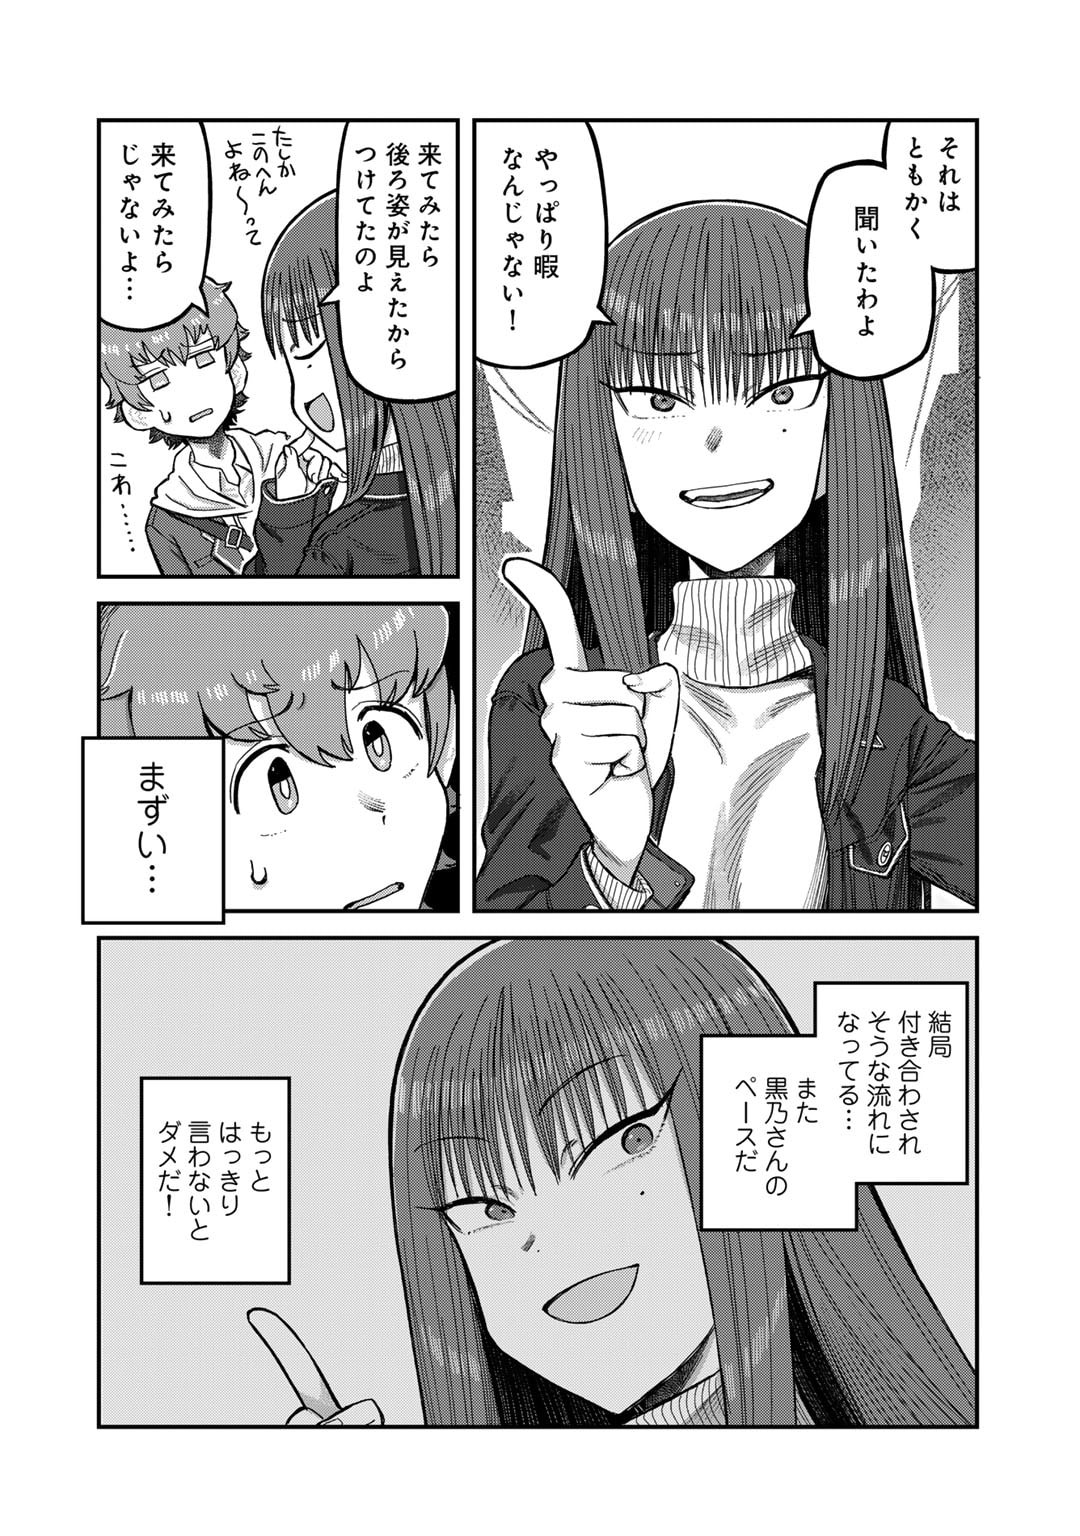 Kurono-san wa Occult ga Suki! - Chapter 5 - Page 8